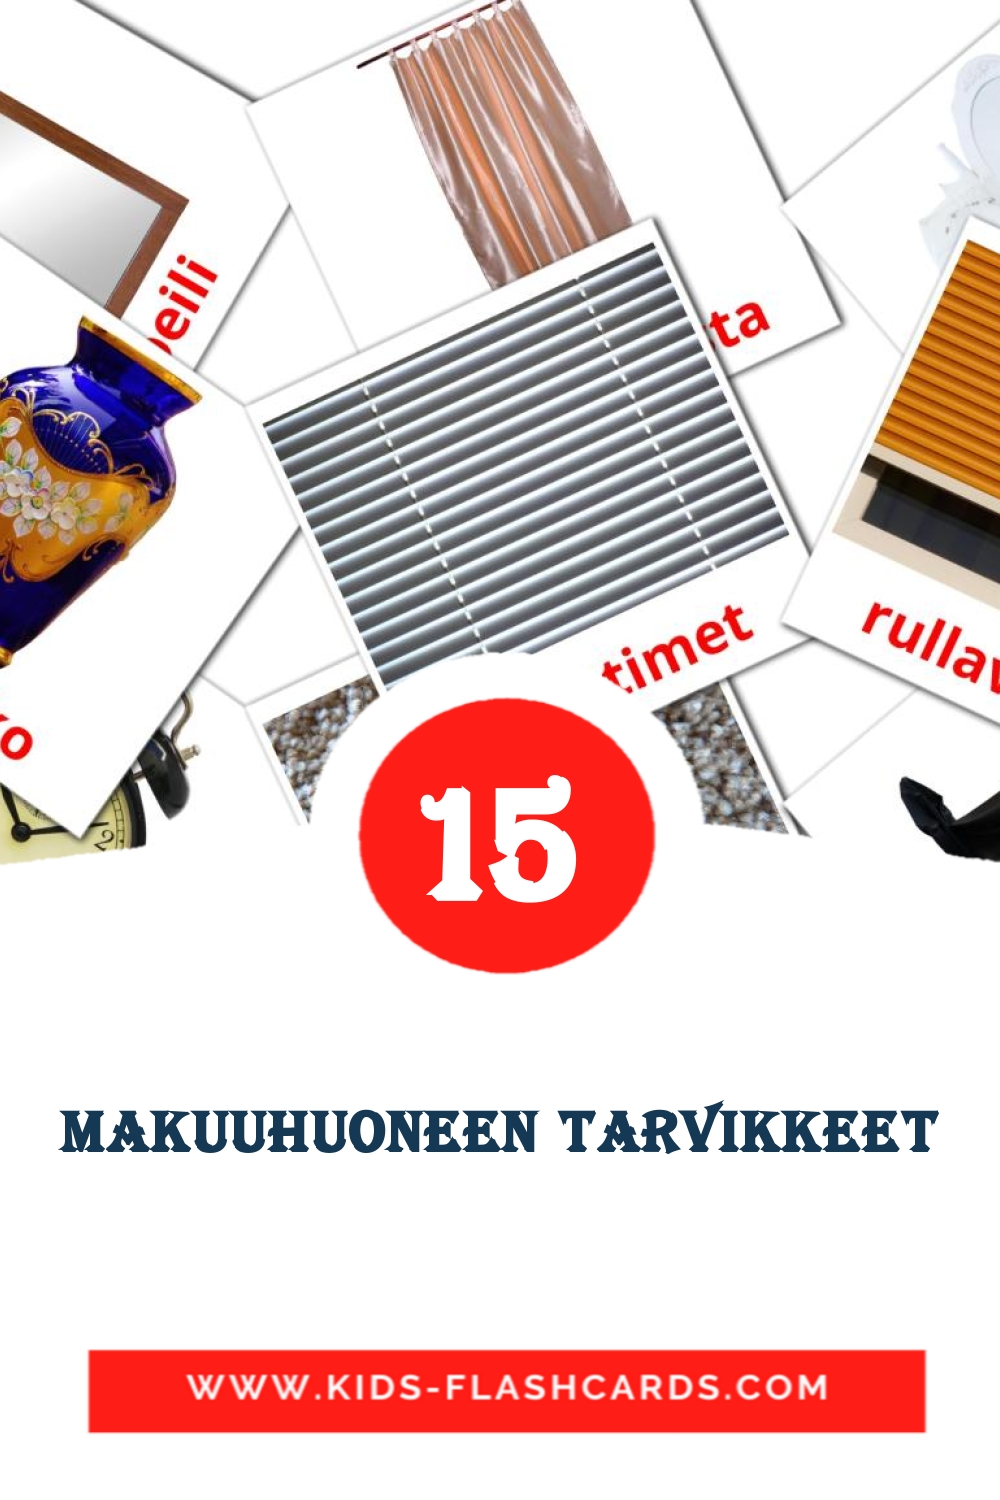 15 Makuuhuoneen tarvikkeet Bildkarten für den Kindergarten auf Finnisch